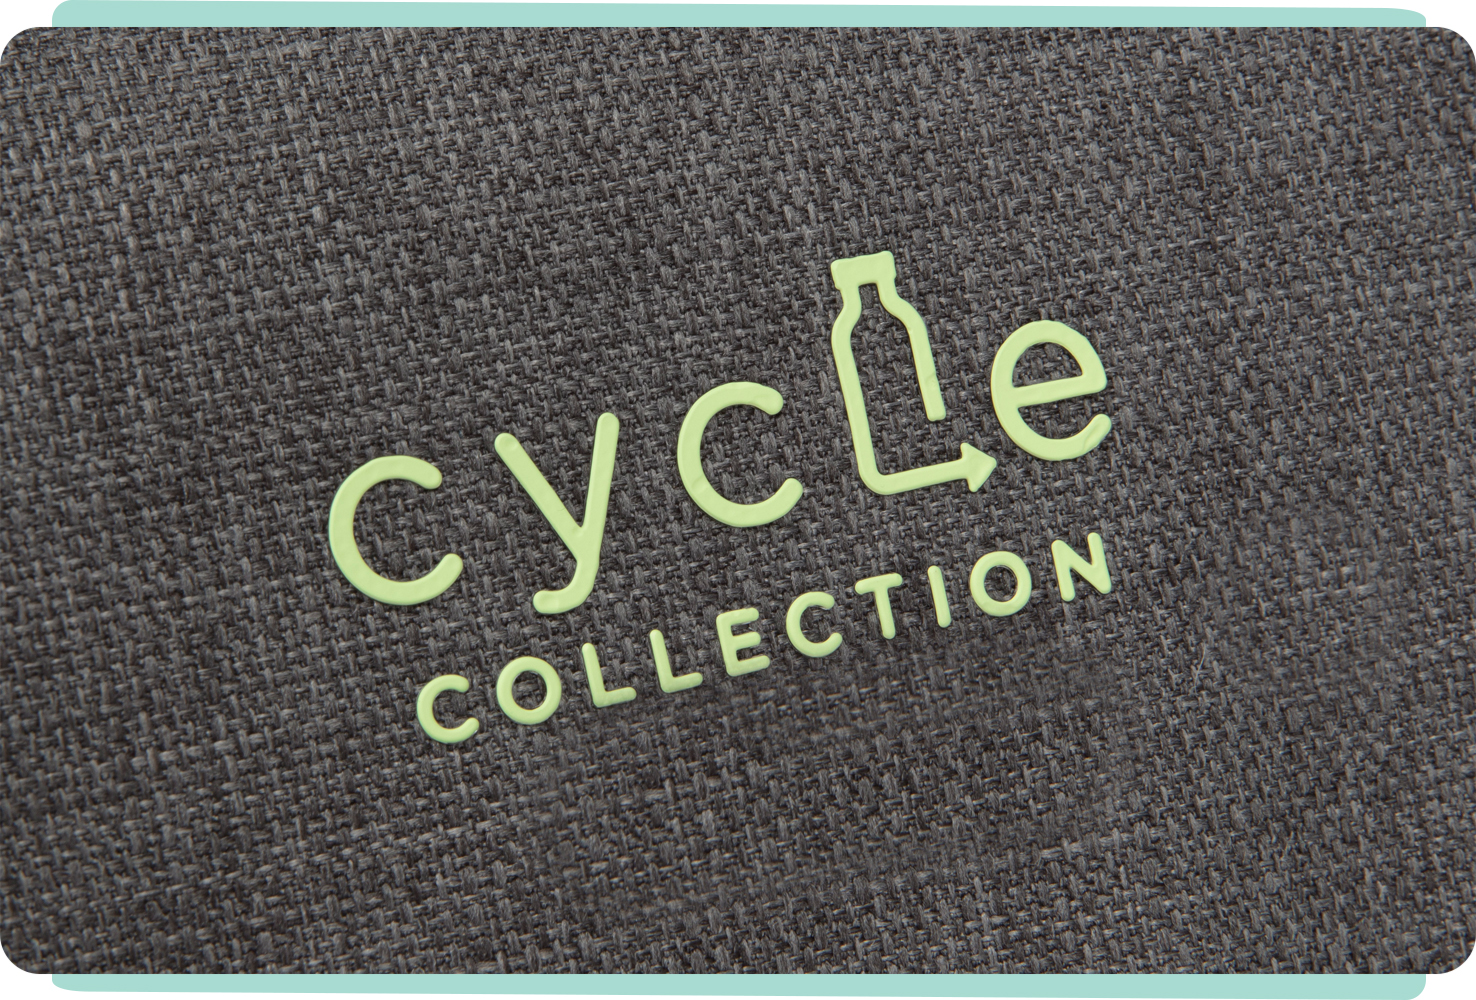 Nahaufnahme eines grünen Cycle Collection-Logos auf dunkelgrauem Stoff.